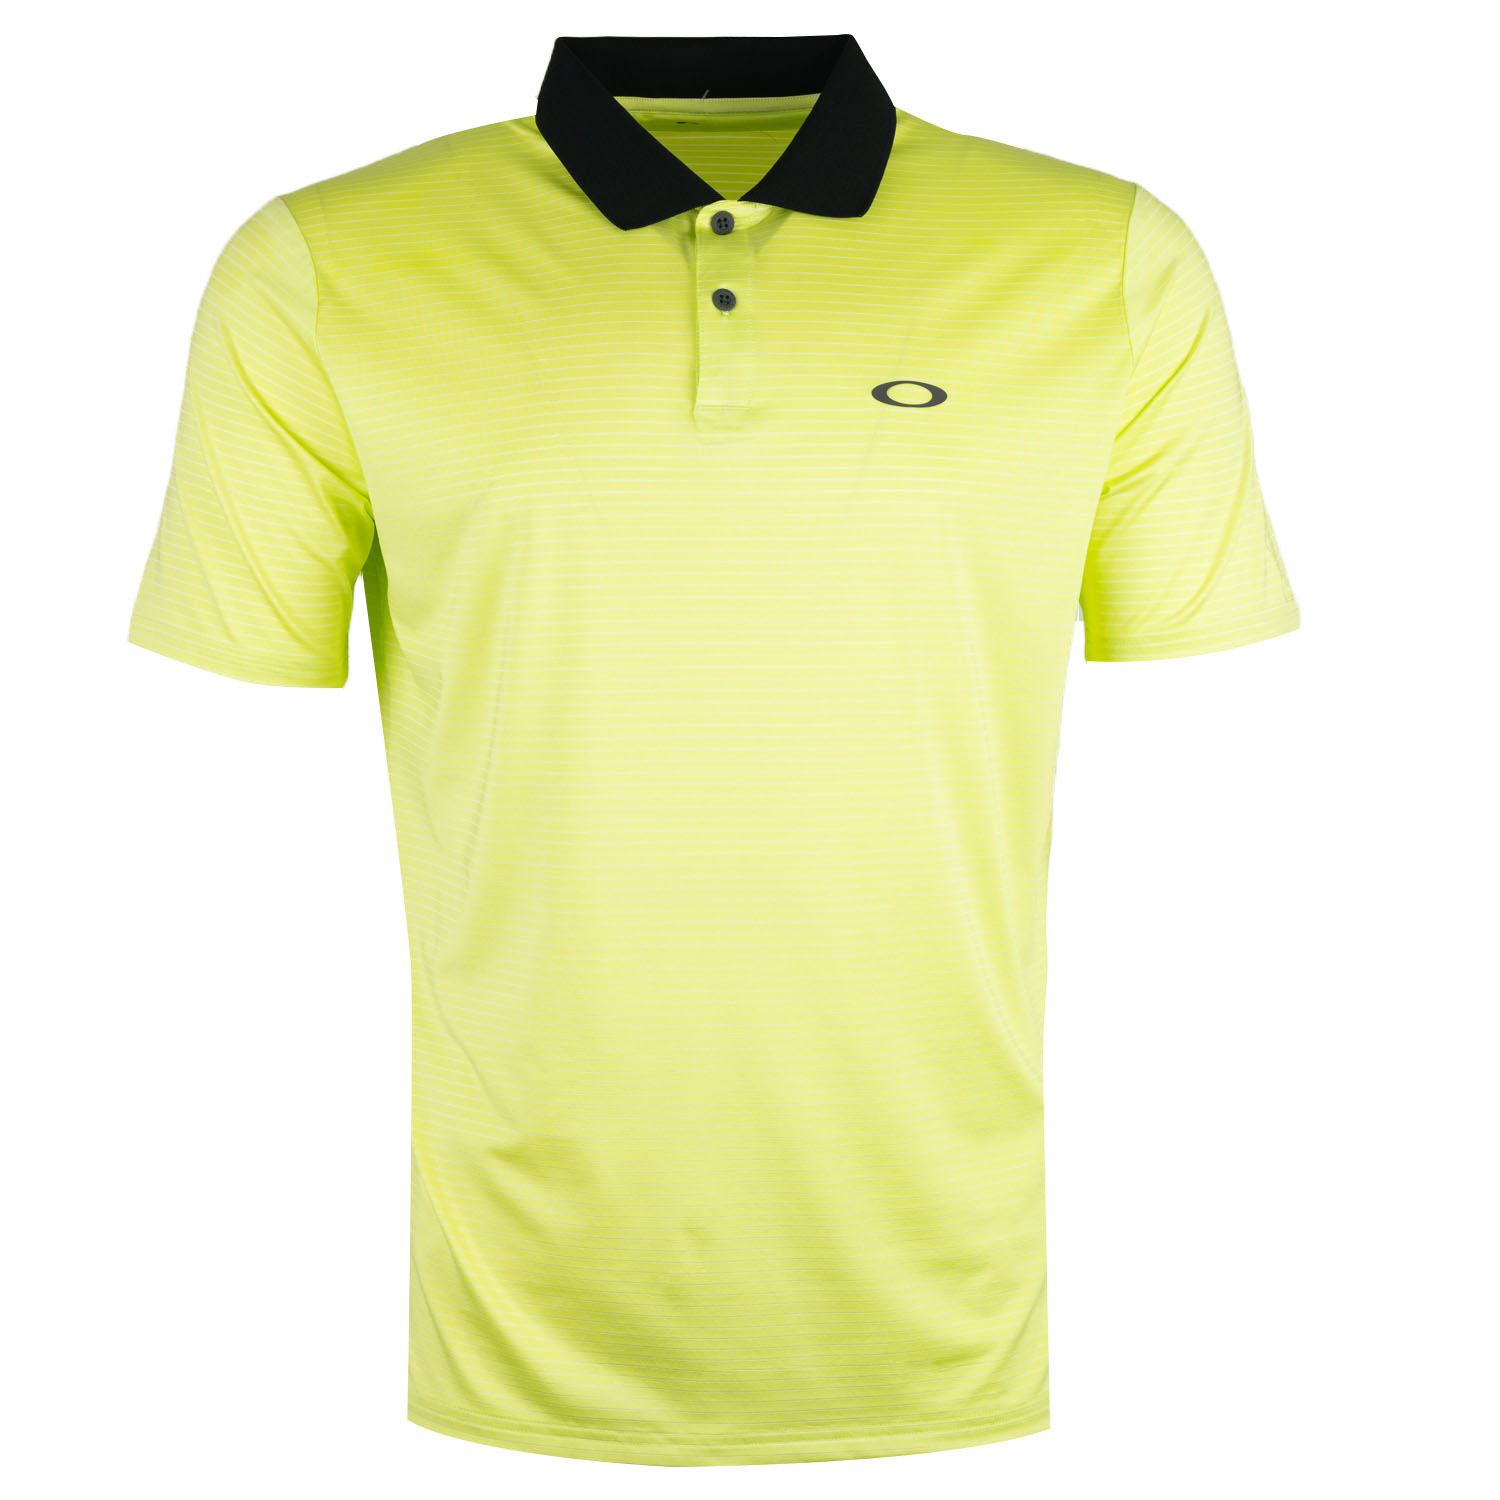 Oakley Divisional Print Golf Polo Shirt